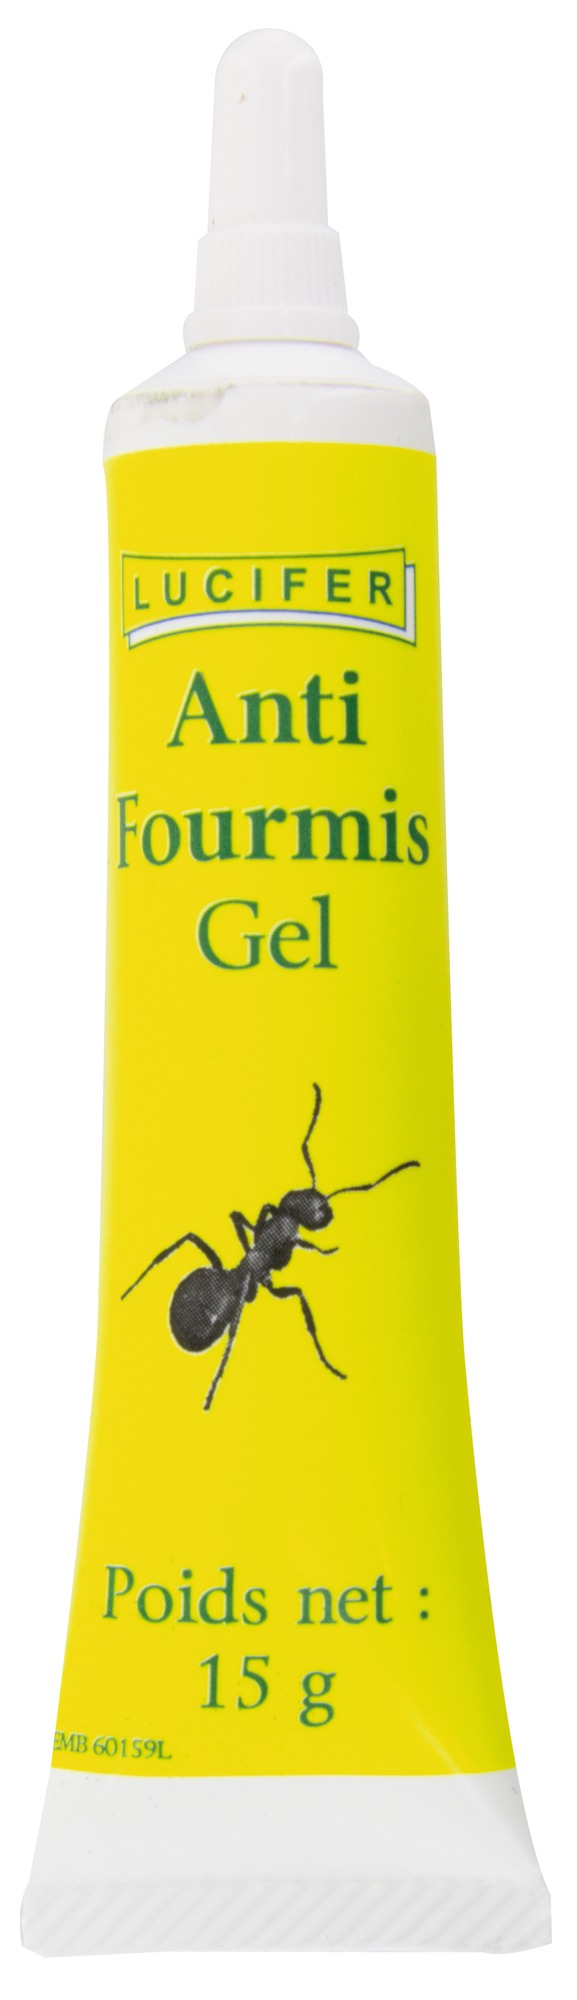 Appat-fourmis gel en tube Masy - Tube de 15 g